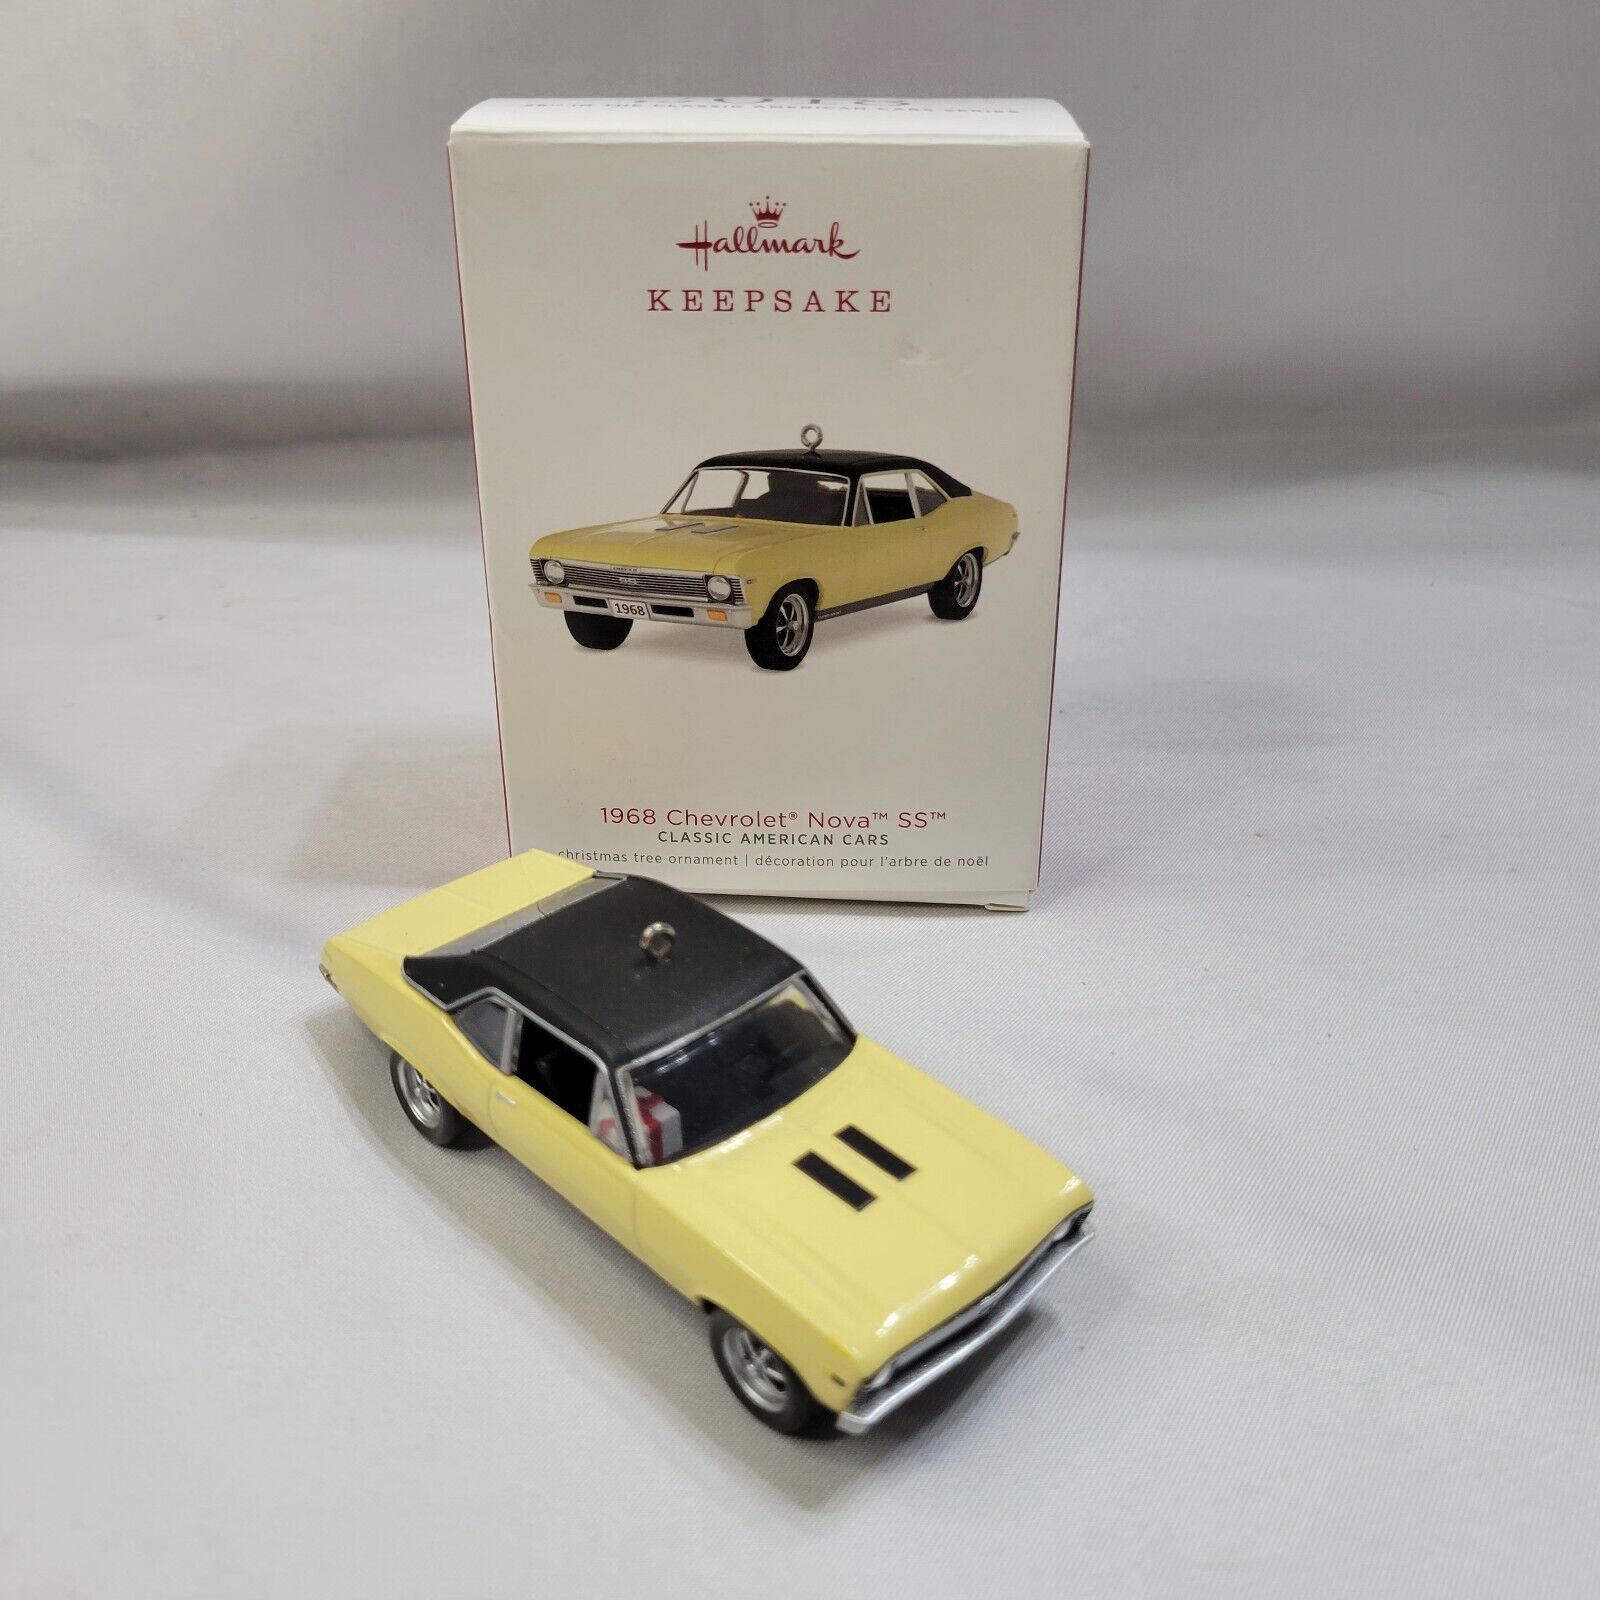 Hallmark Keepsake - 1968 Chevrolet Nova SS - 28th - 2018 **NEW / **